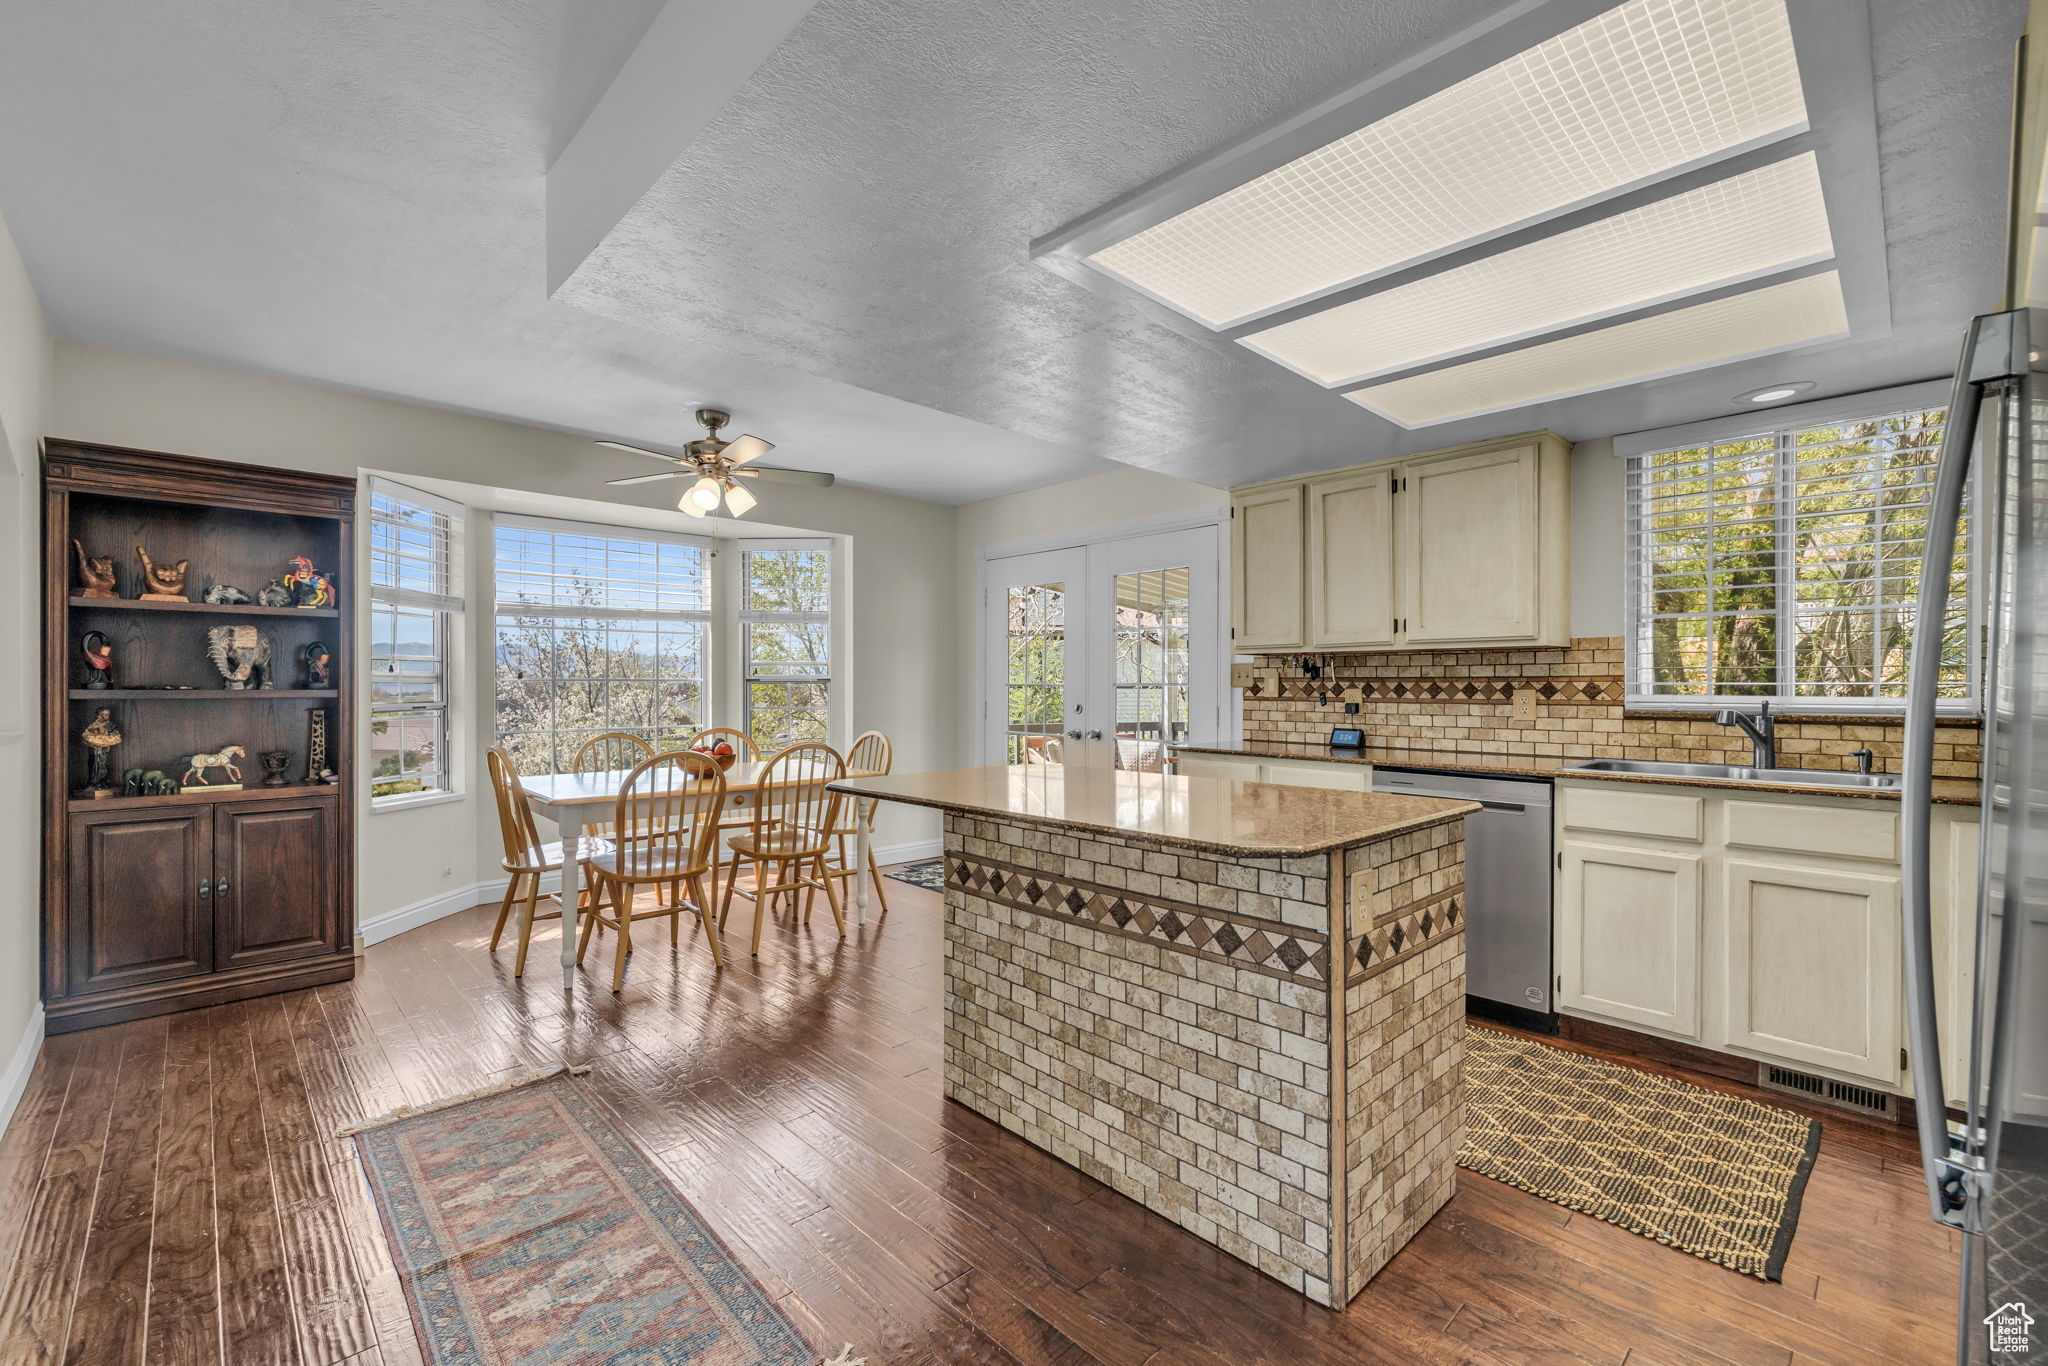 Kitchen with cream cabinets, backsplash, ceiling fan, dark wood-type flooring, and stainless steel dishwasher